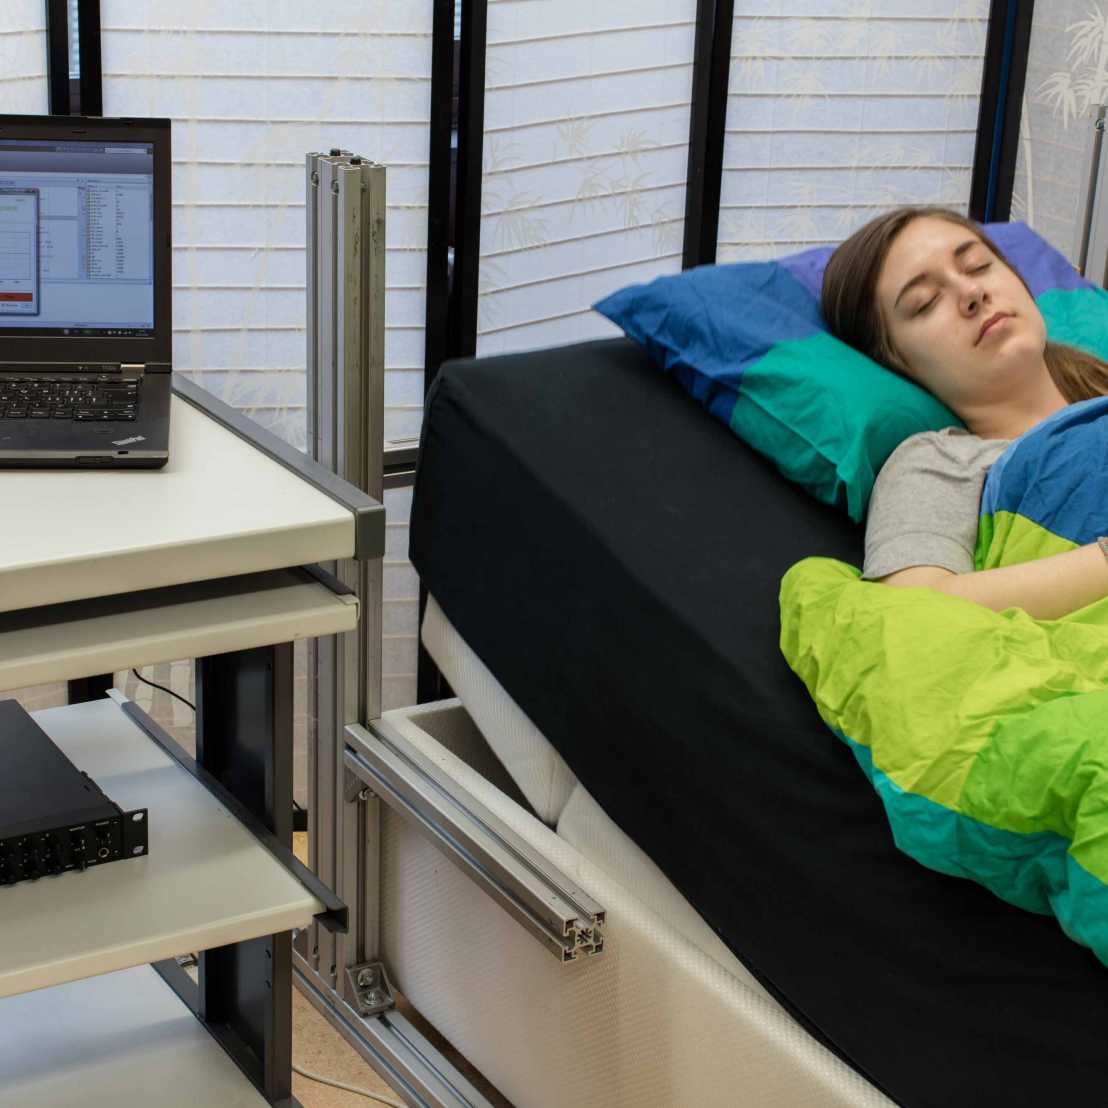 Example of the study setup at the sleep laboratory